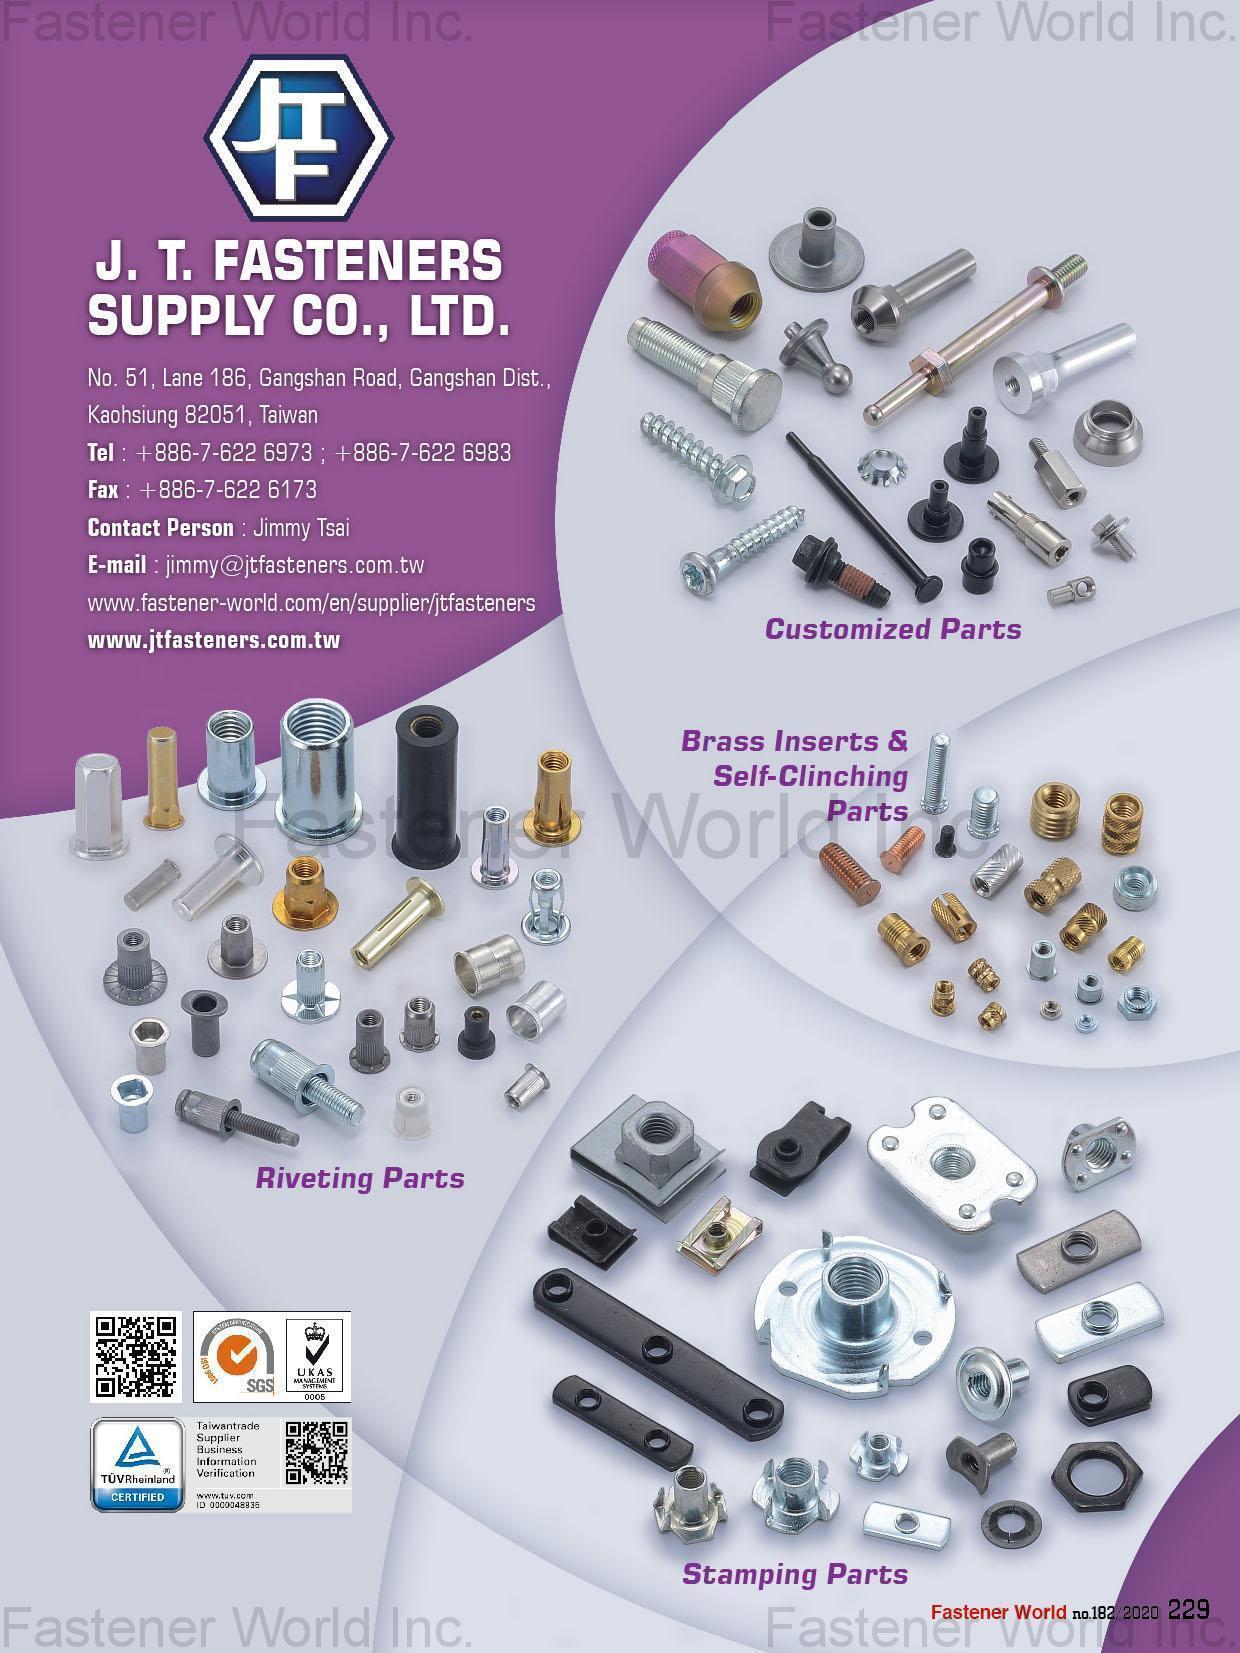 金祐昇實業有限公司 (J. T. Fasteners Supply Co., Ltd.) 